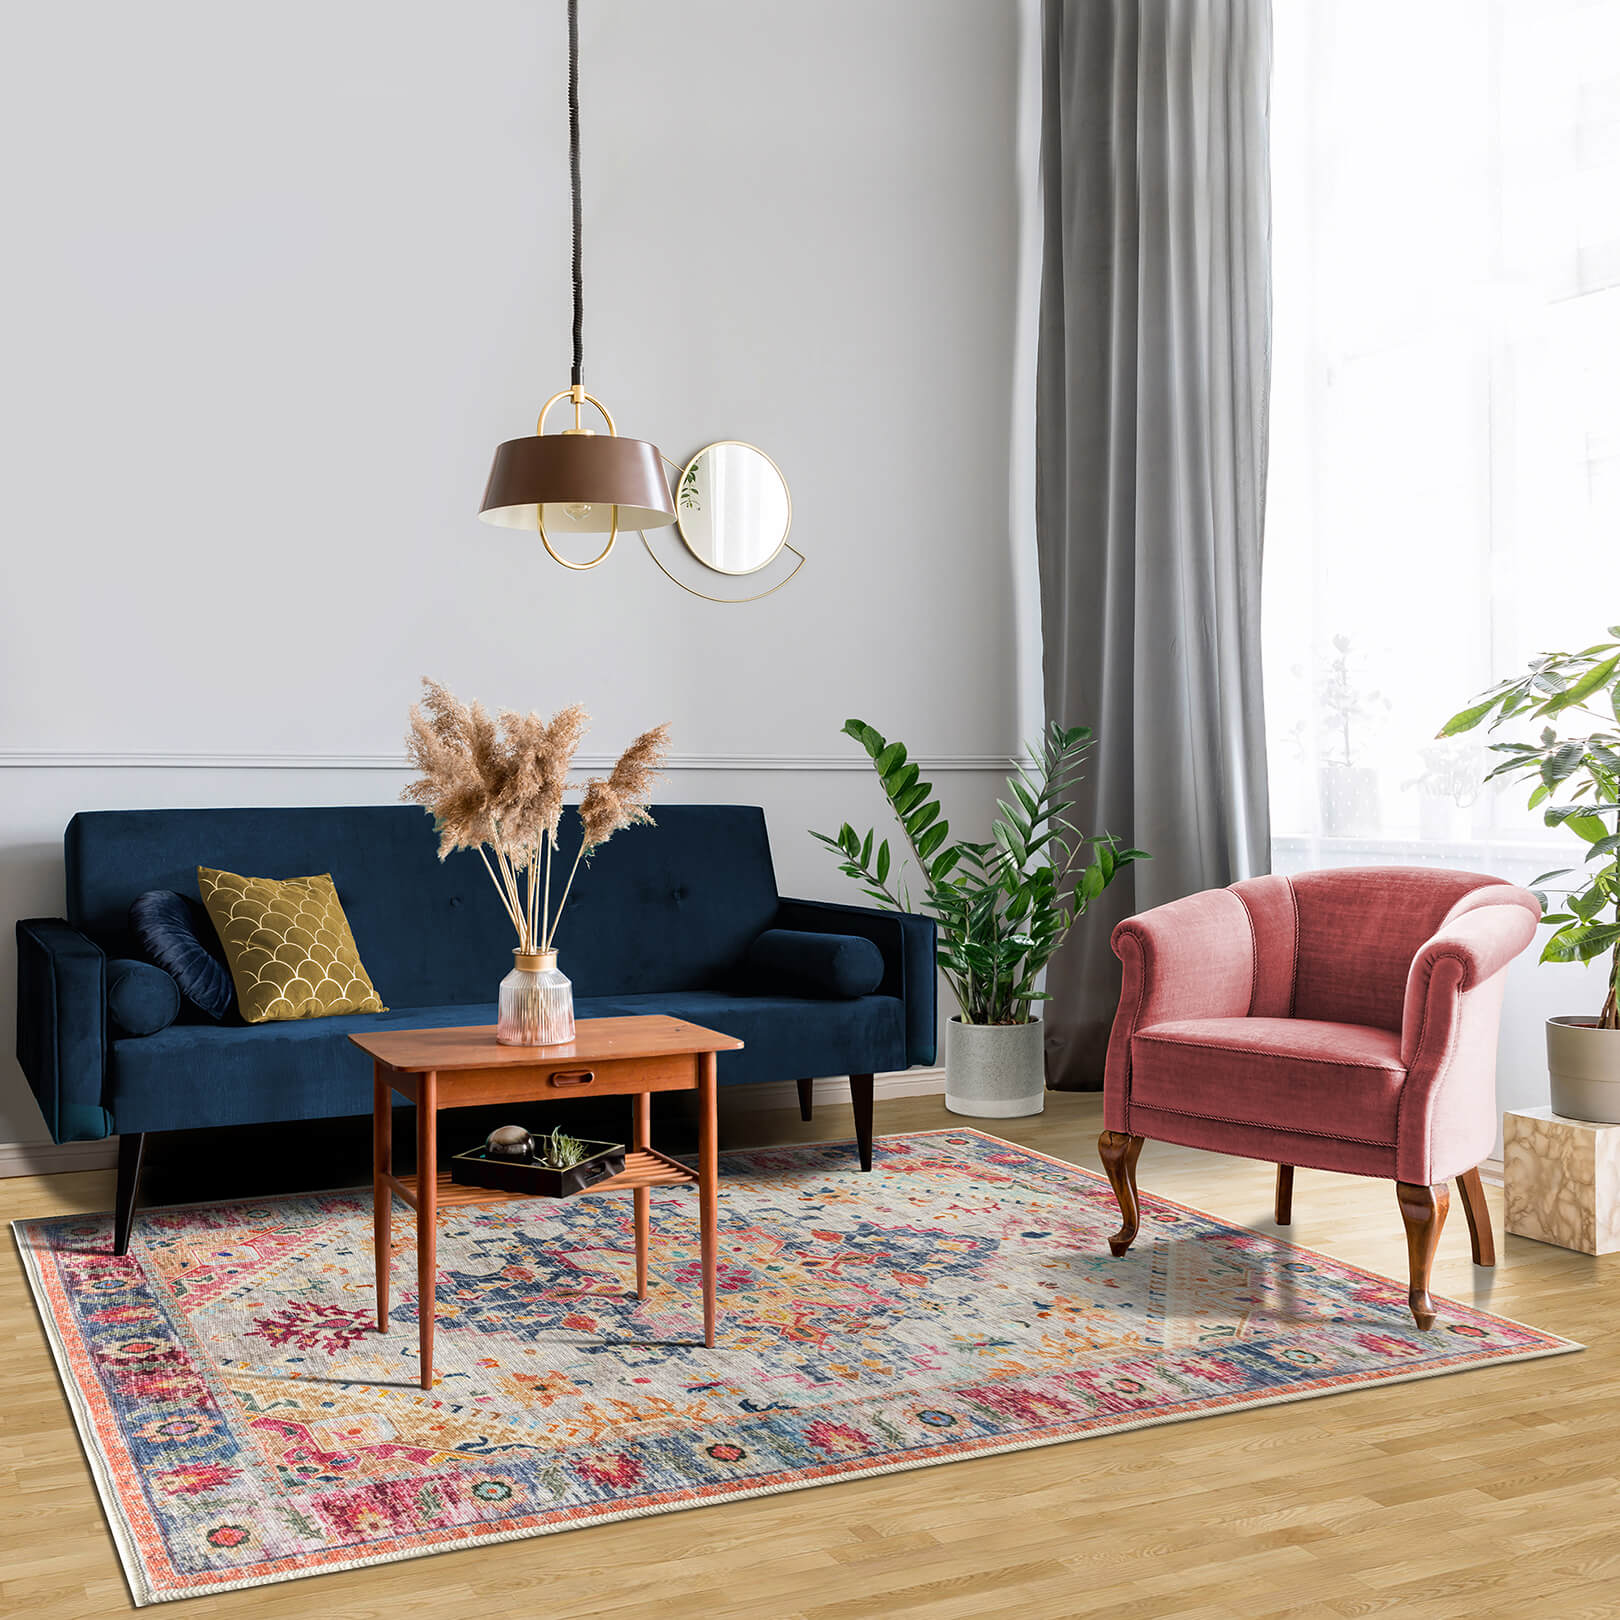 Carpet Mart Milagros Multicolor Machine Washable Rug - For Living Room, Dining Room, Bedroom, Kitchens, Kids/Nursery Room